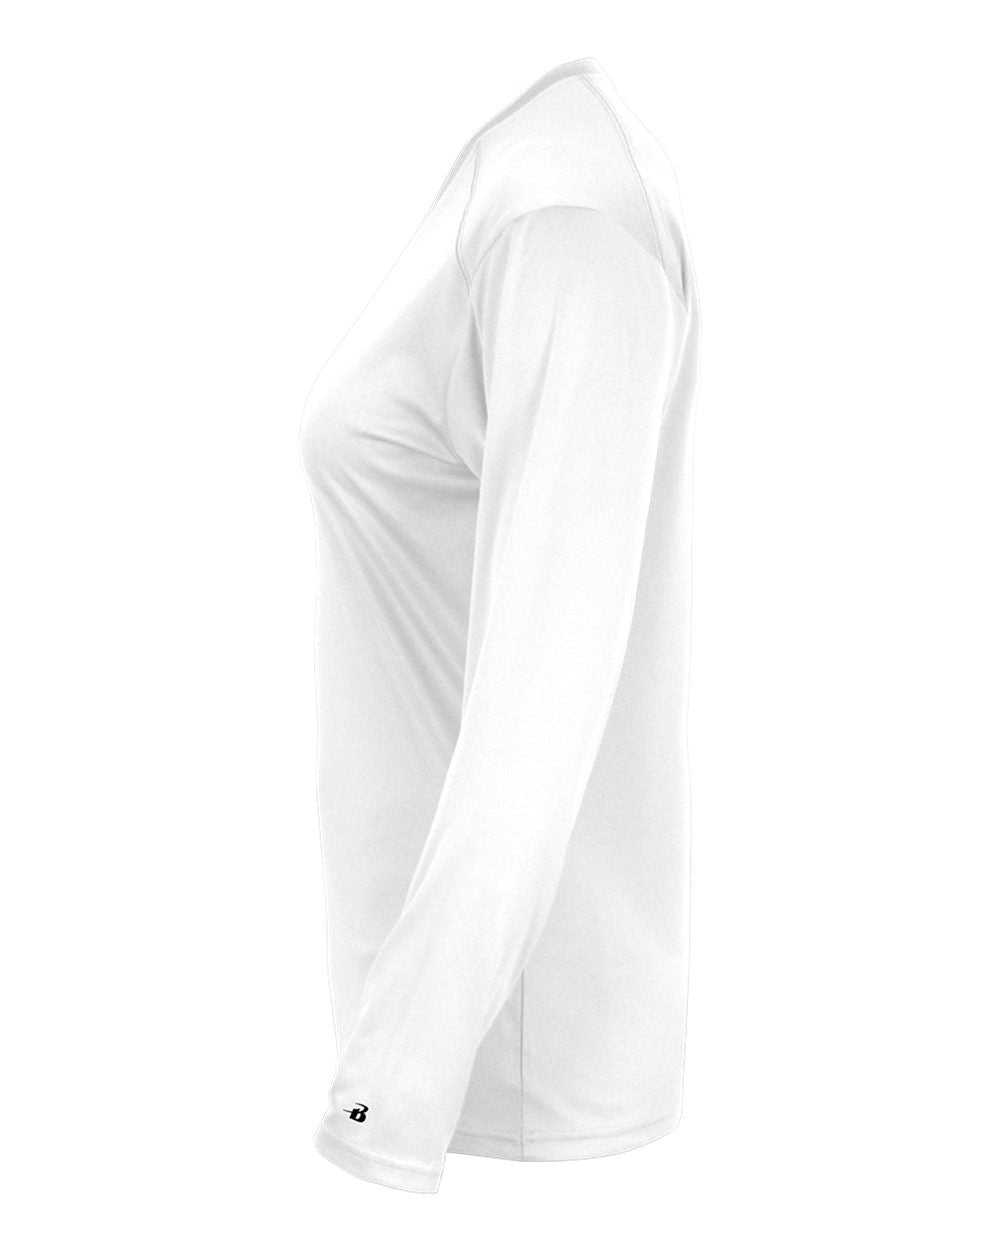 Badger Sport 4064 Ultimate Softlock V-neck Ladies Long Sleeve Tee - White - HIT a Double - 1